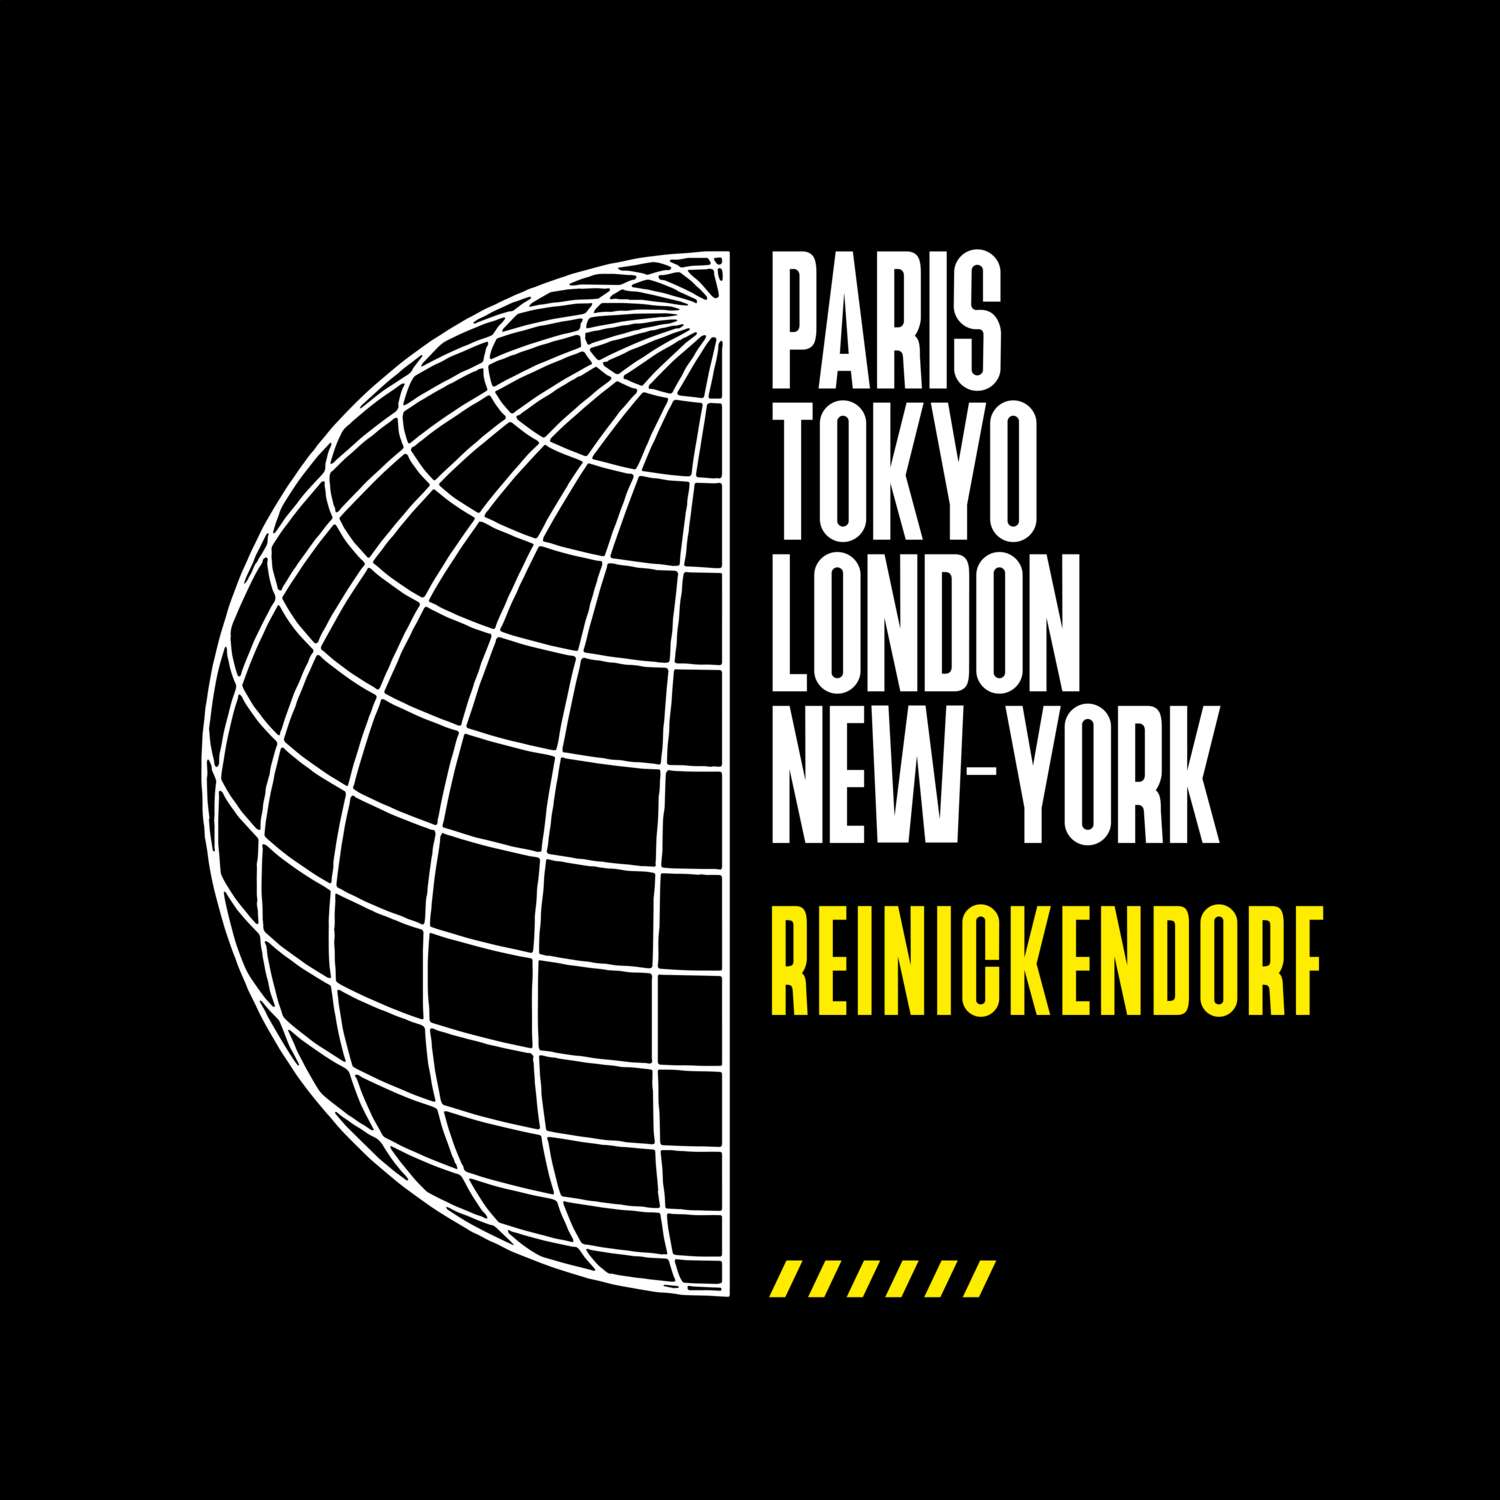 Reinickendorf T-Shirt »Paris Tokyo London«